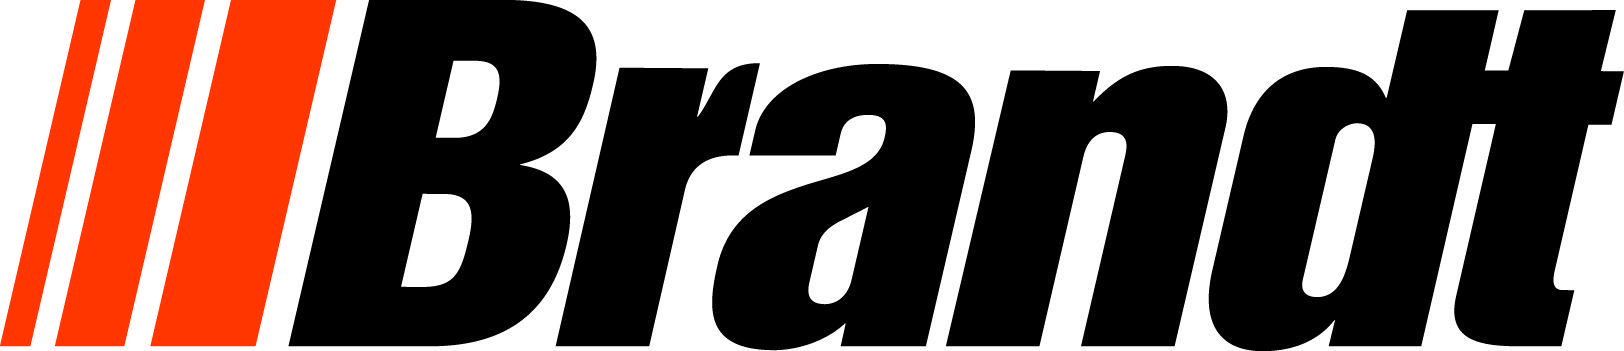 Brandt Logo - Brandt-logo-2C - Alberta Forest Products Association